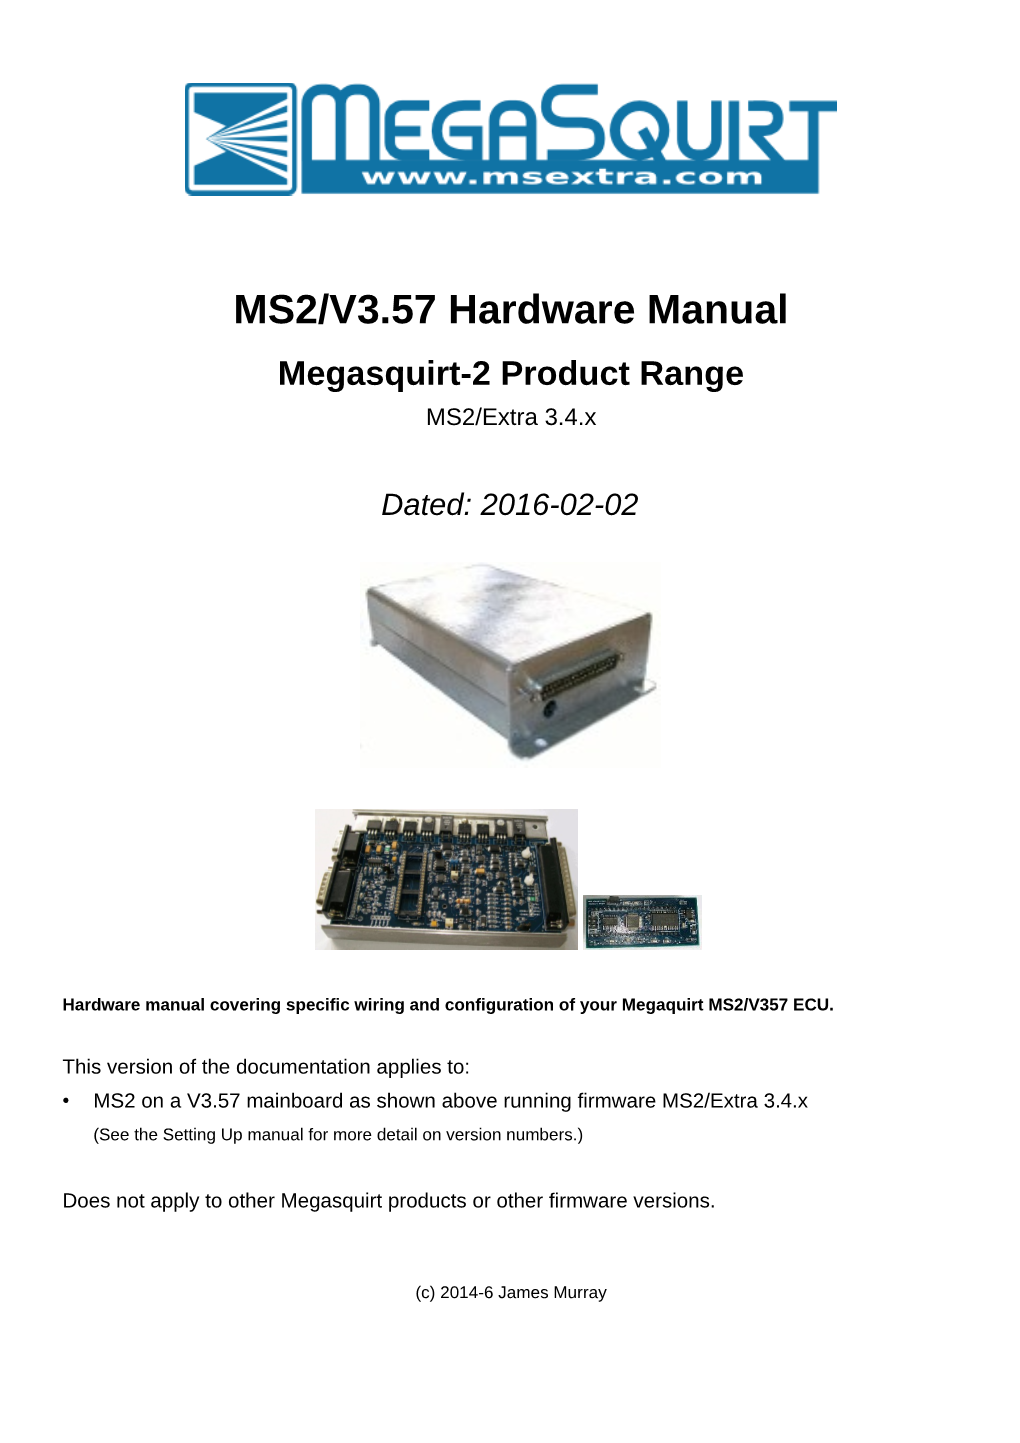 MS2/V3.57 Hardware Manual Megasquirt-2 Product Range MS2/Extra 3.4.X